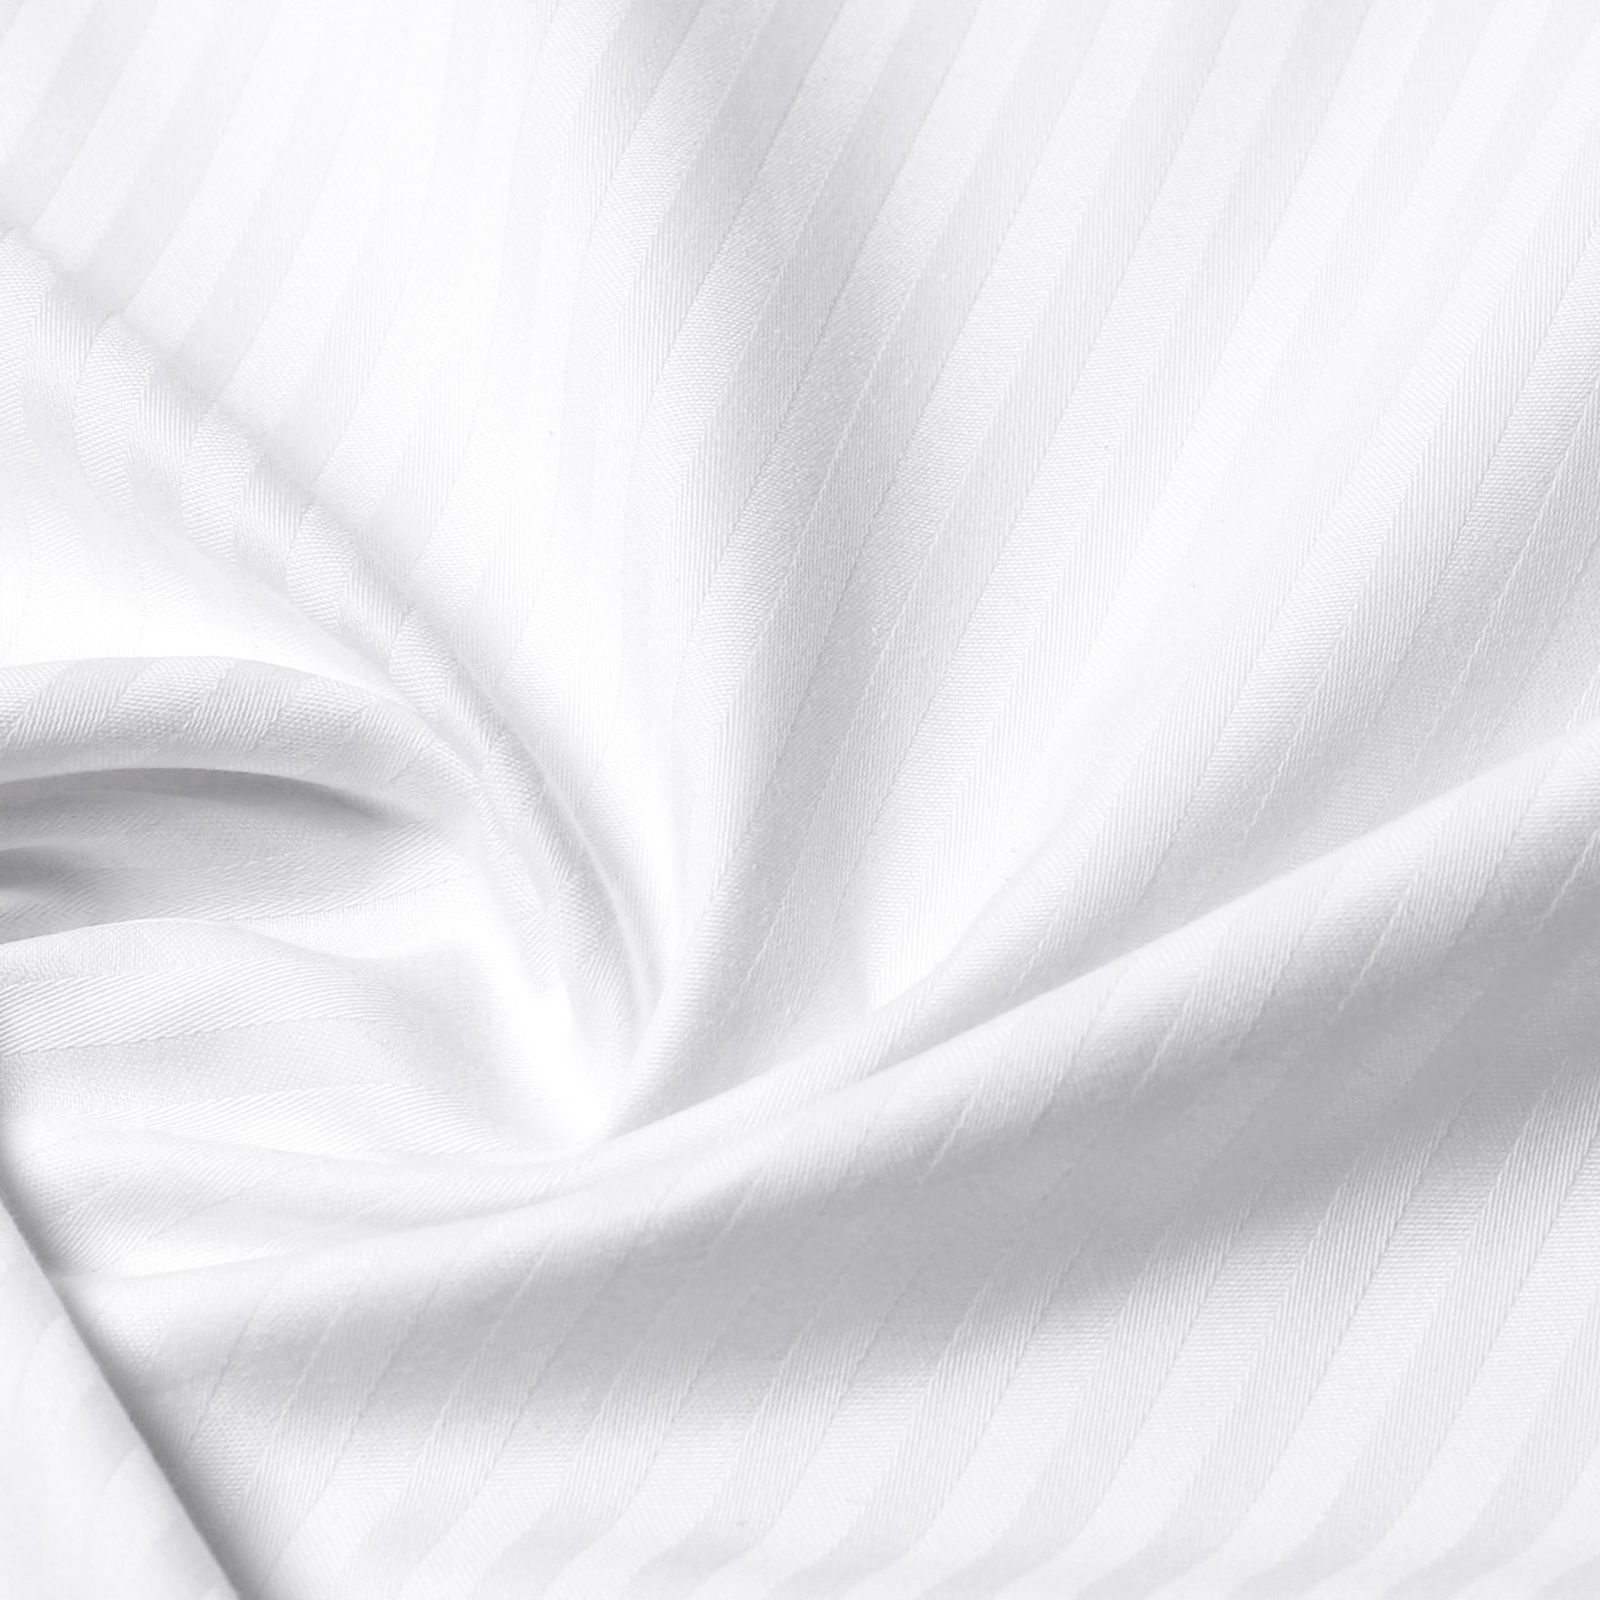 Lenjerie de pat din damasc cu dungi 4mm - alb